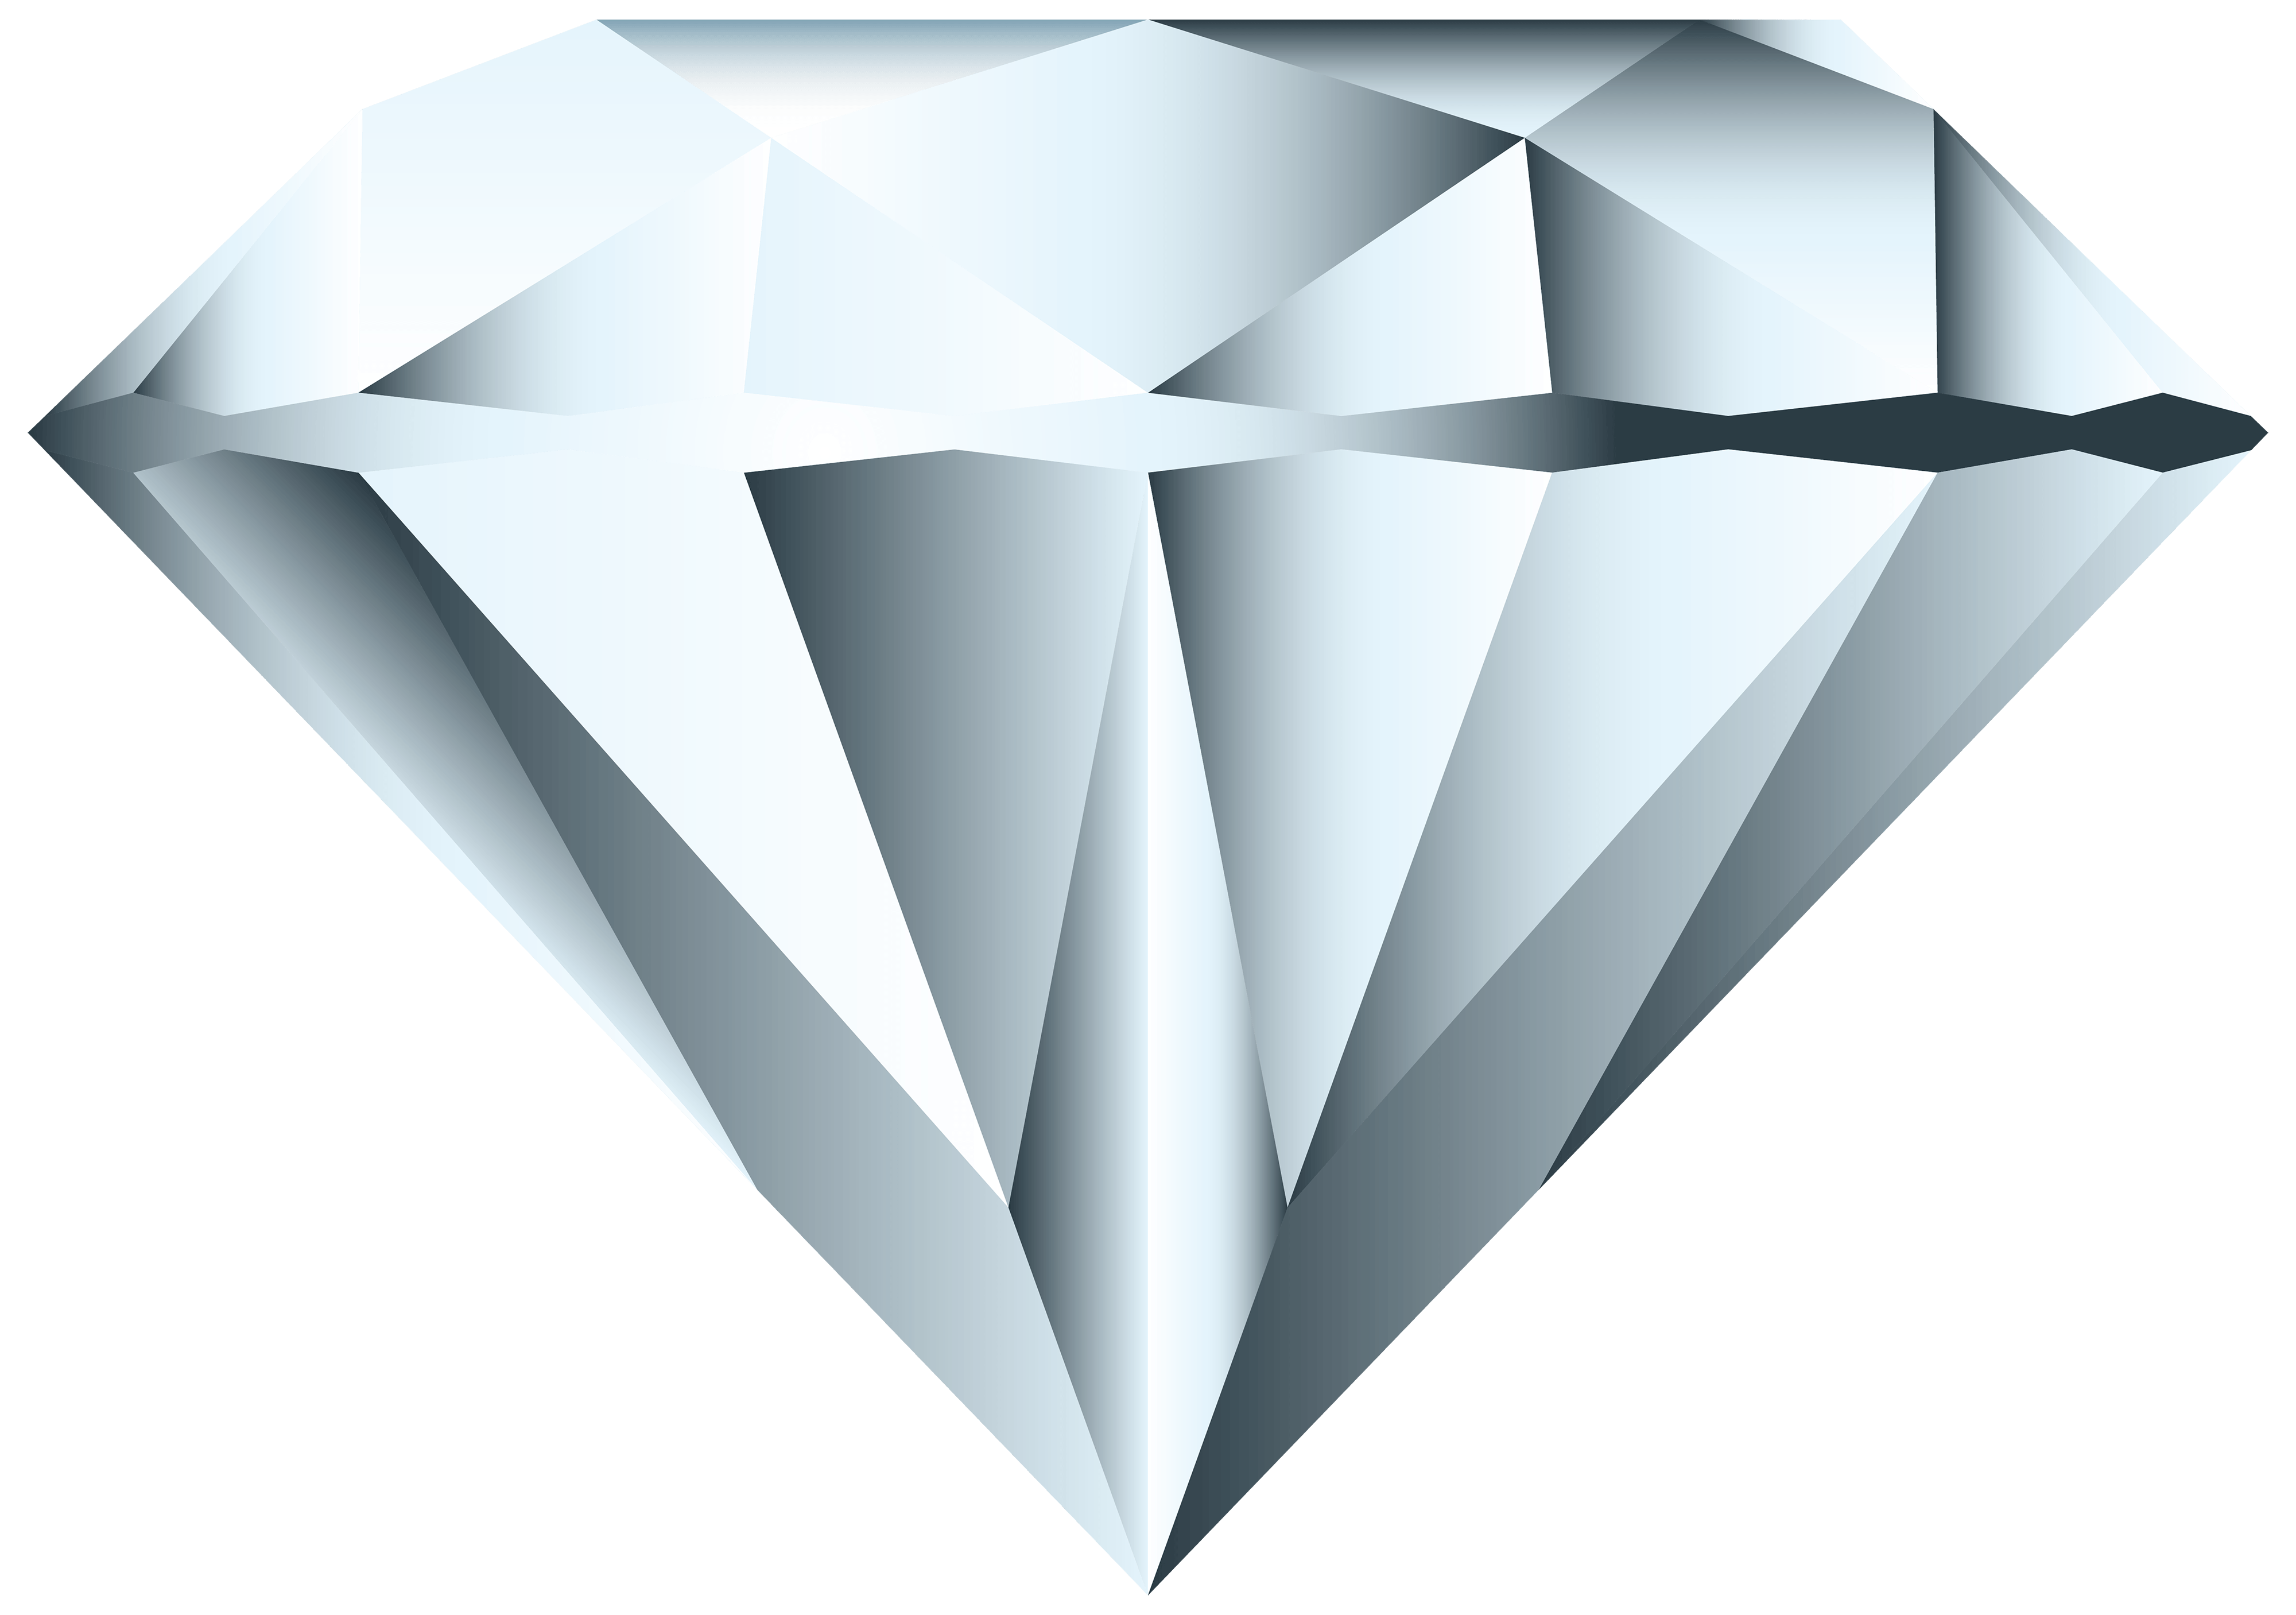 Silver Diamond Logo - Diamonds clipart for free download and use in presentations. longfordpc